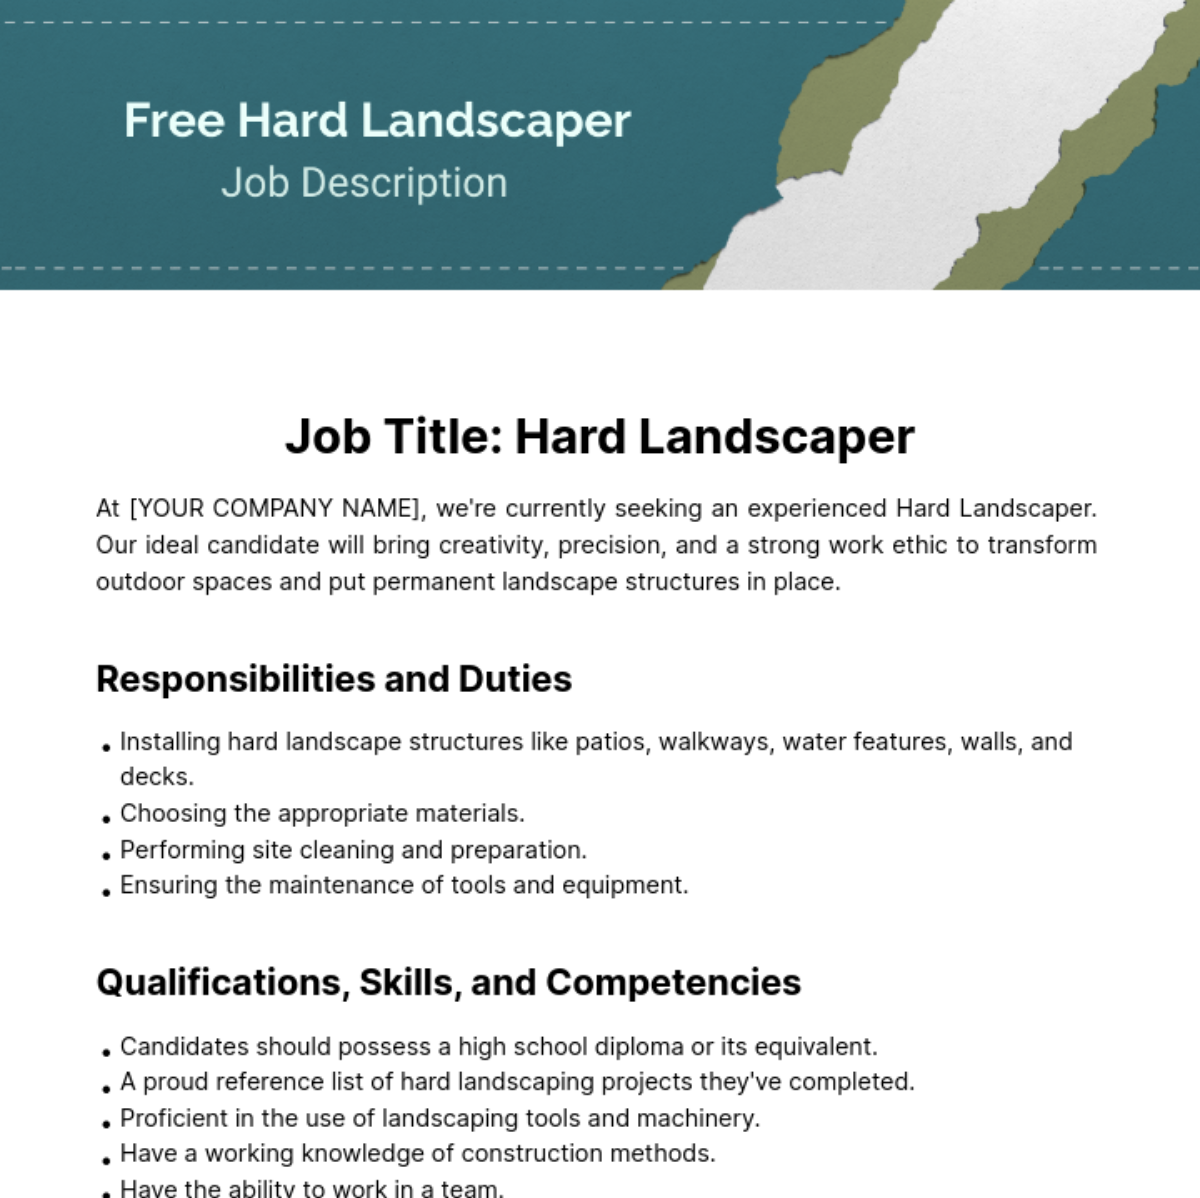 Free Hard Landscaper Job Description Template